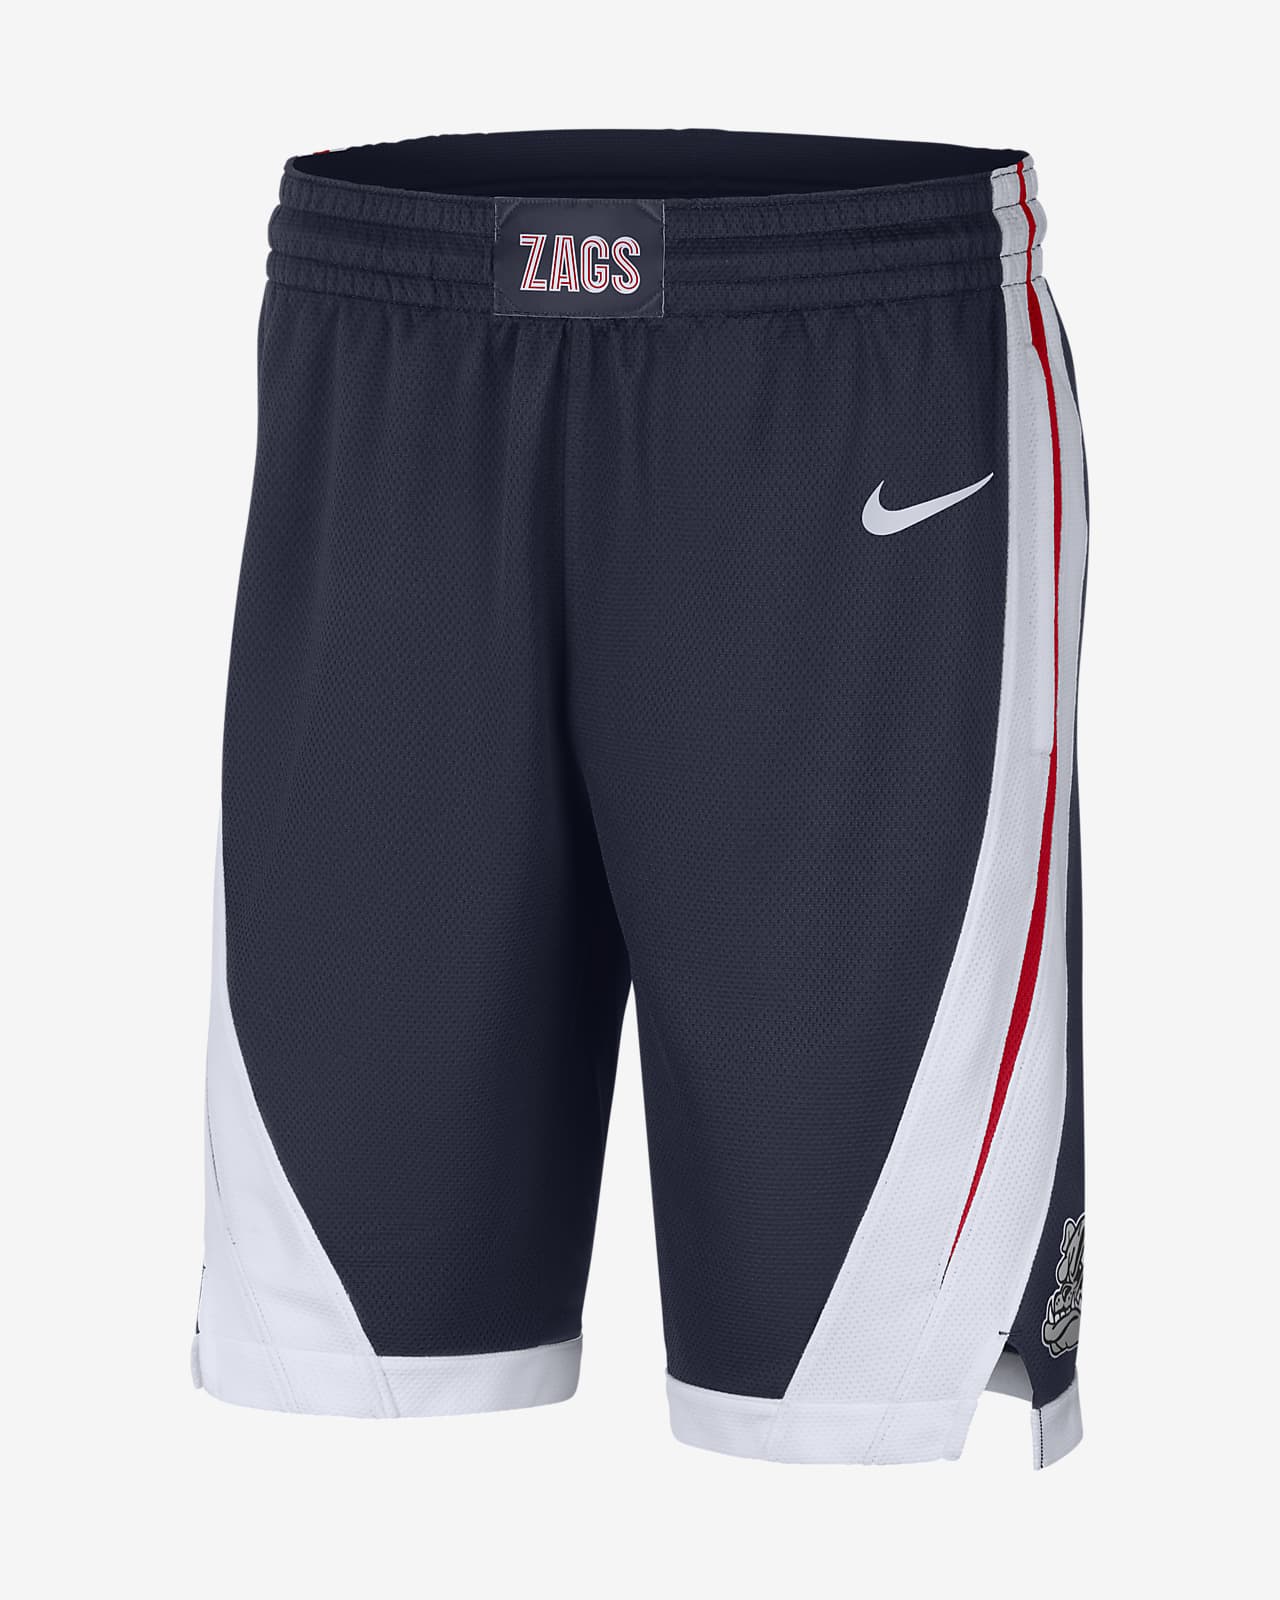 Nike College Dri-FIT (Gonzaga) Men's Basketball Shorts